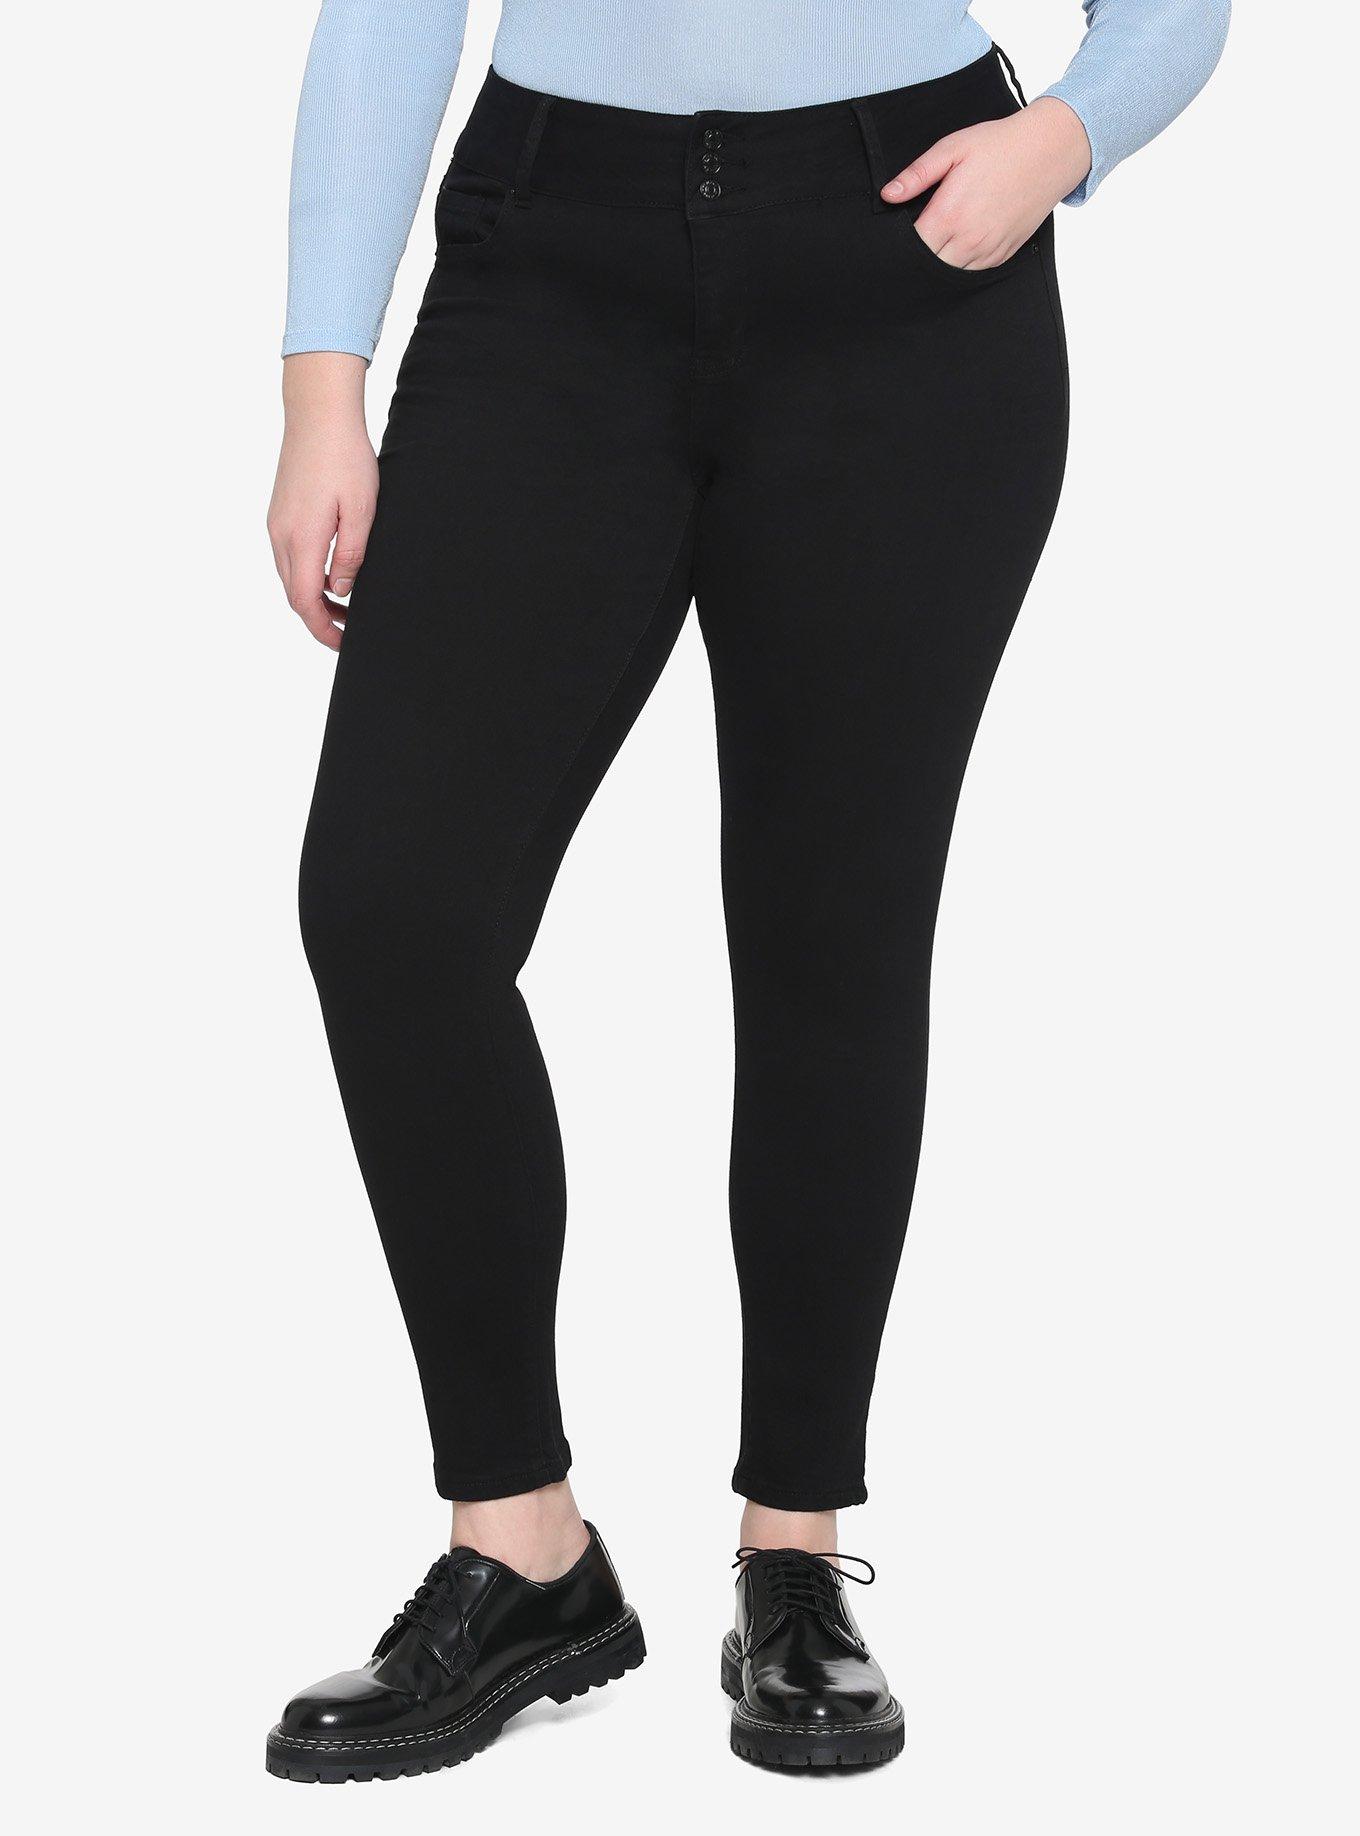 Black 3-Button Skinny Jeans Plus Size, BLACK, hi-res